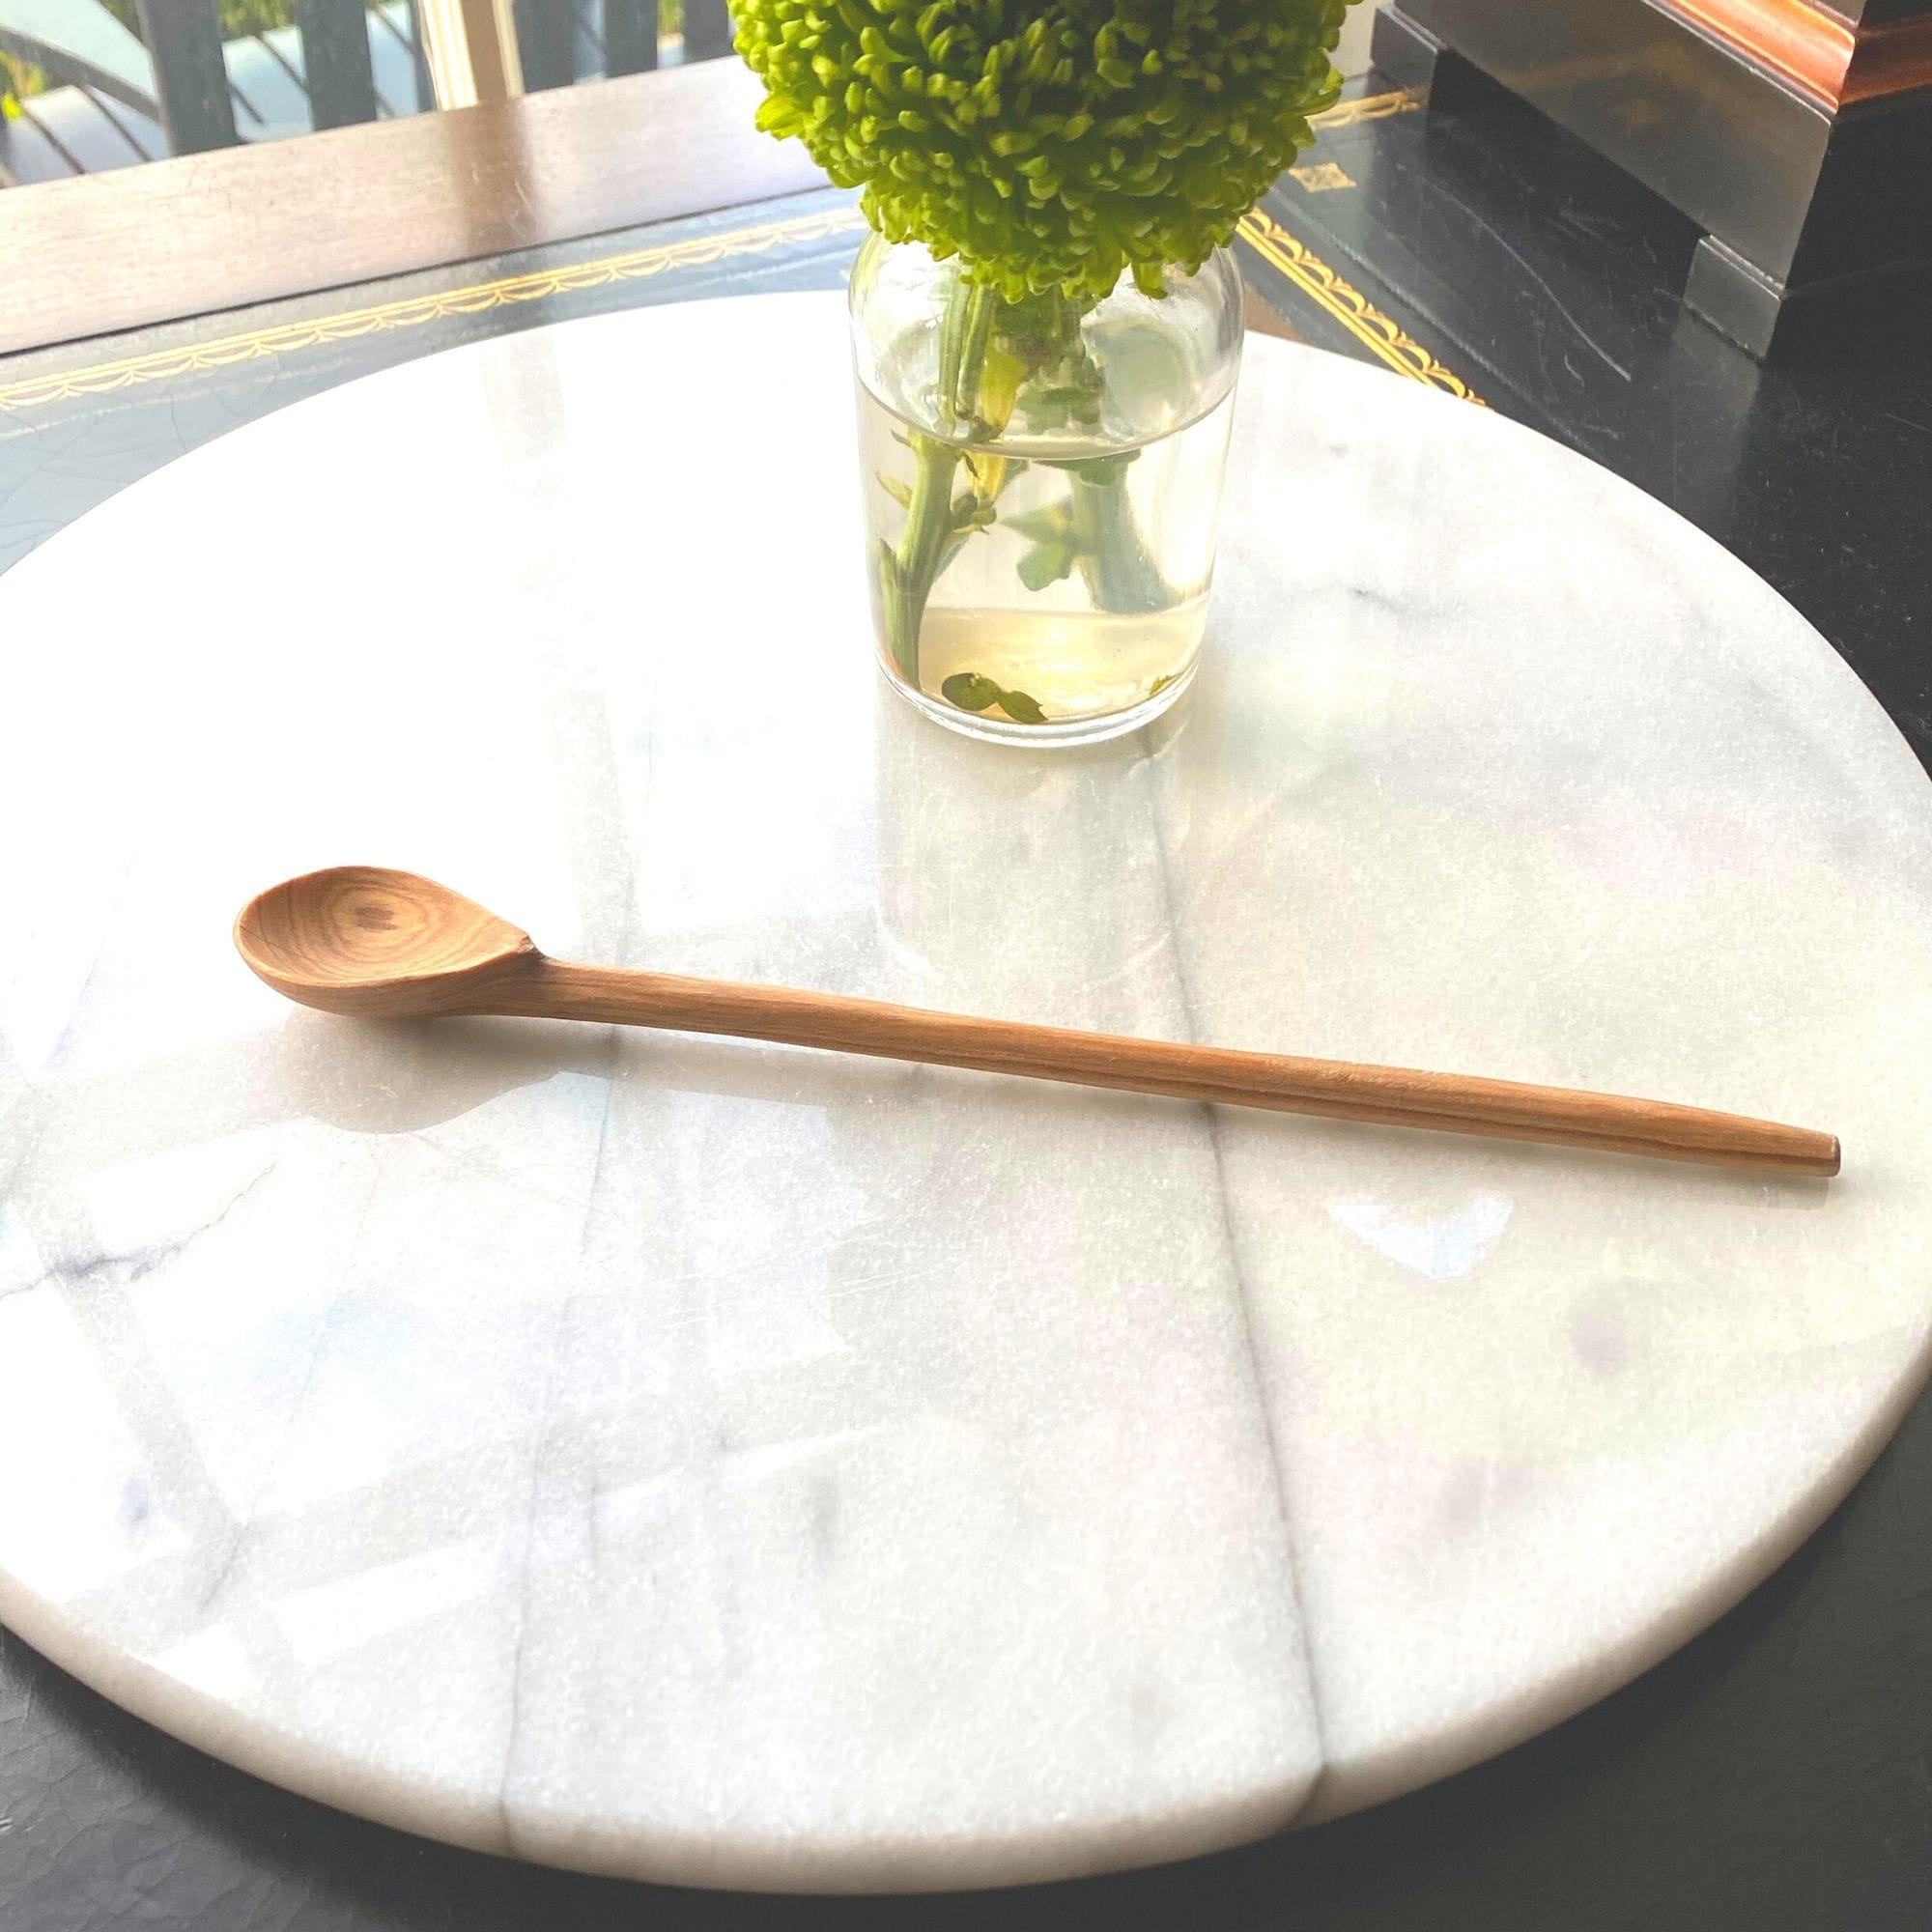 Olive Wood Long Appetizer Spoon, Set of 3